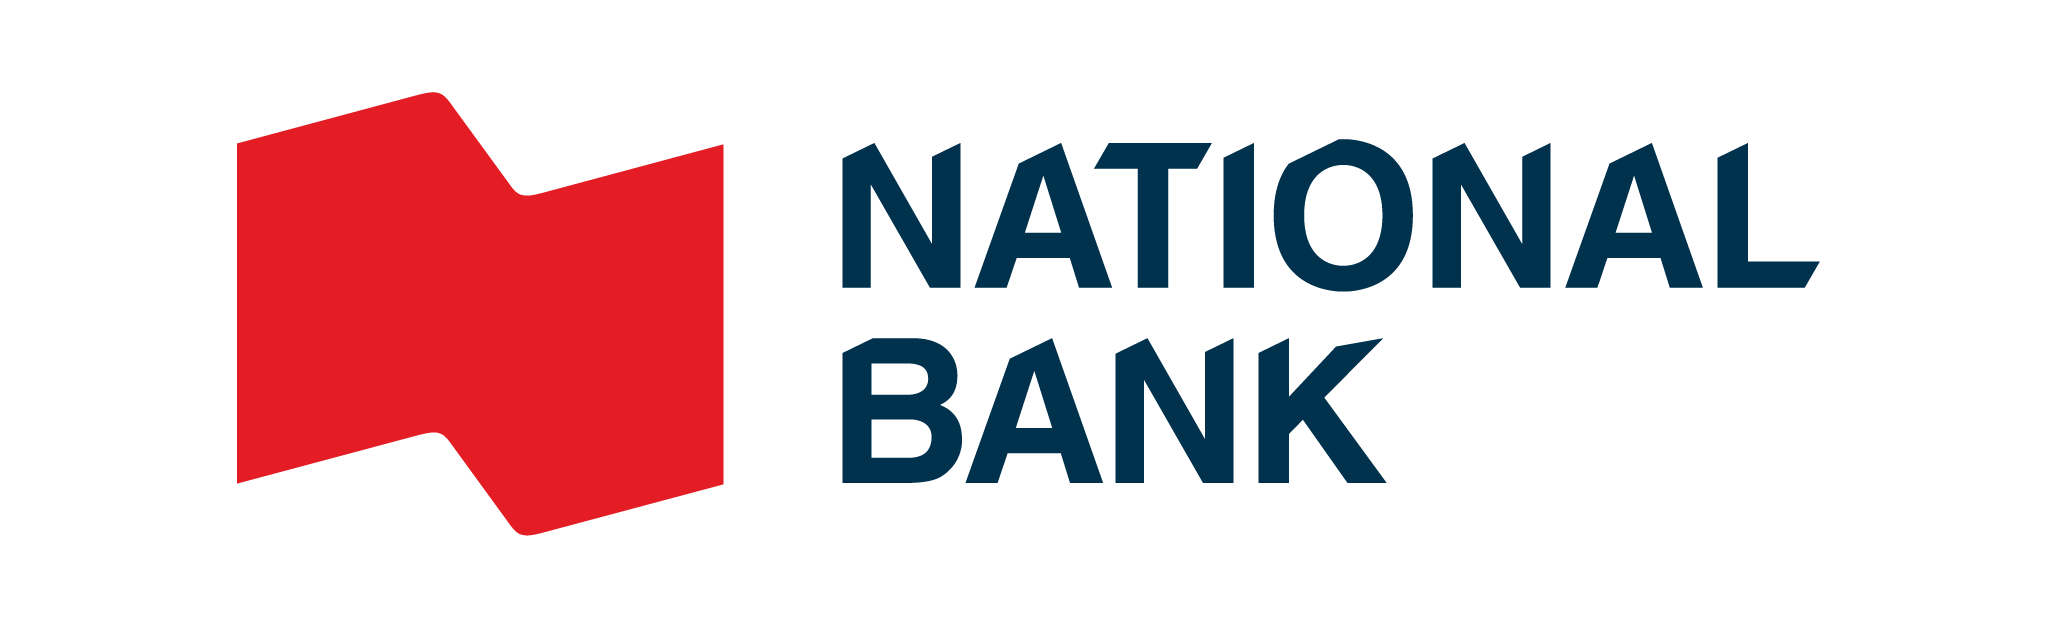 The National Bank - Logo